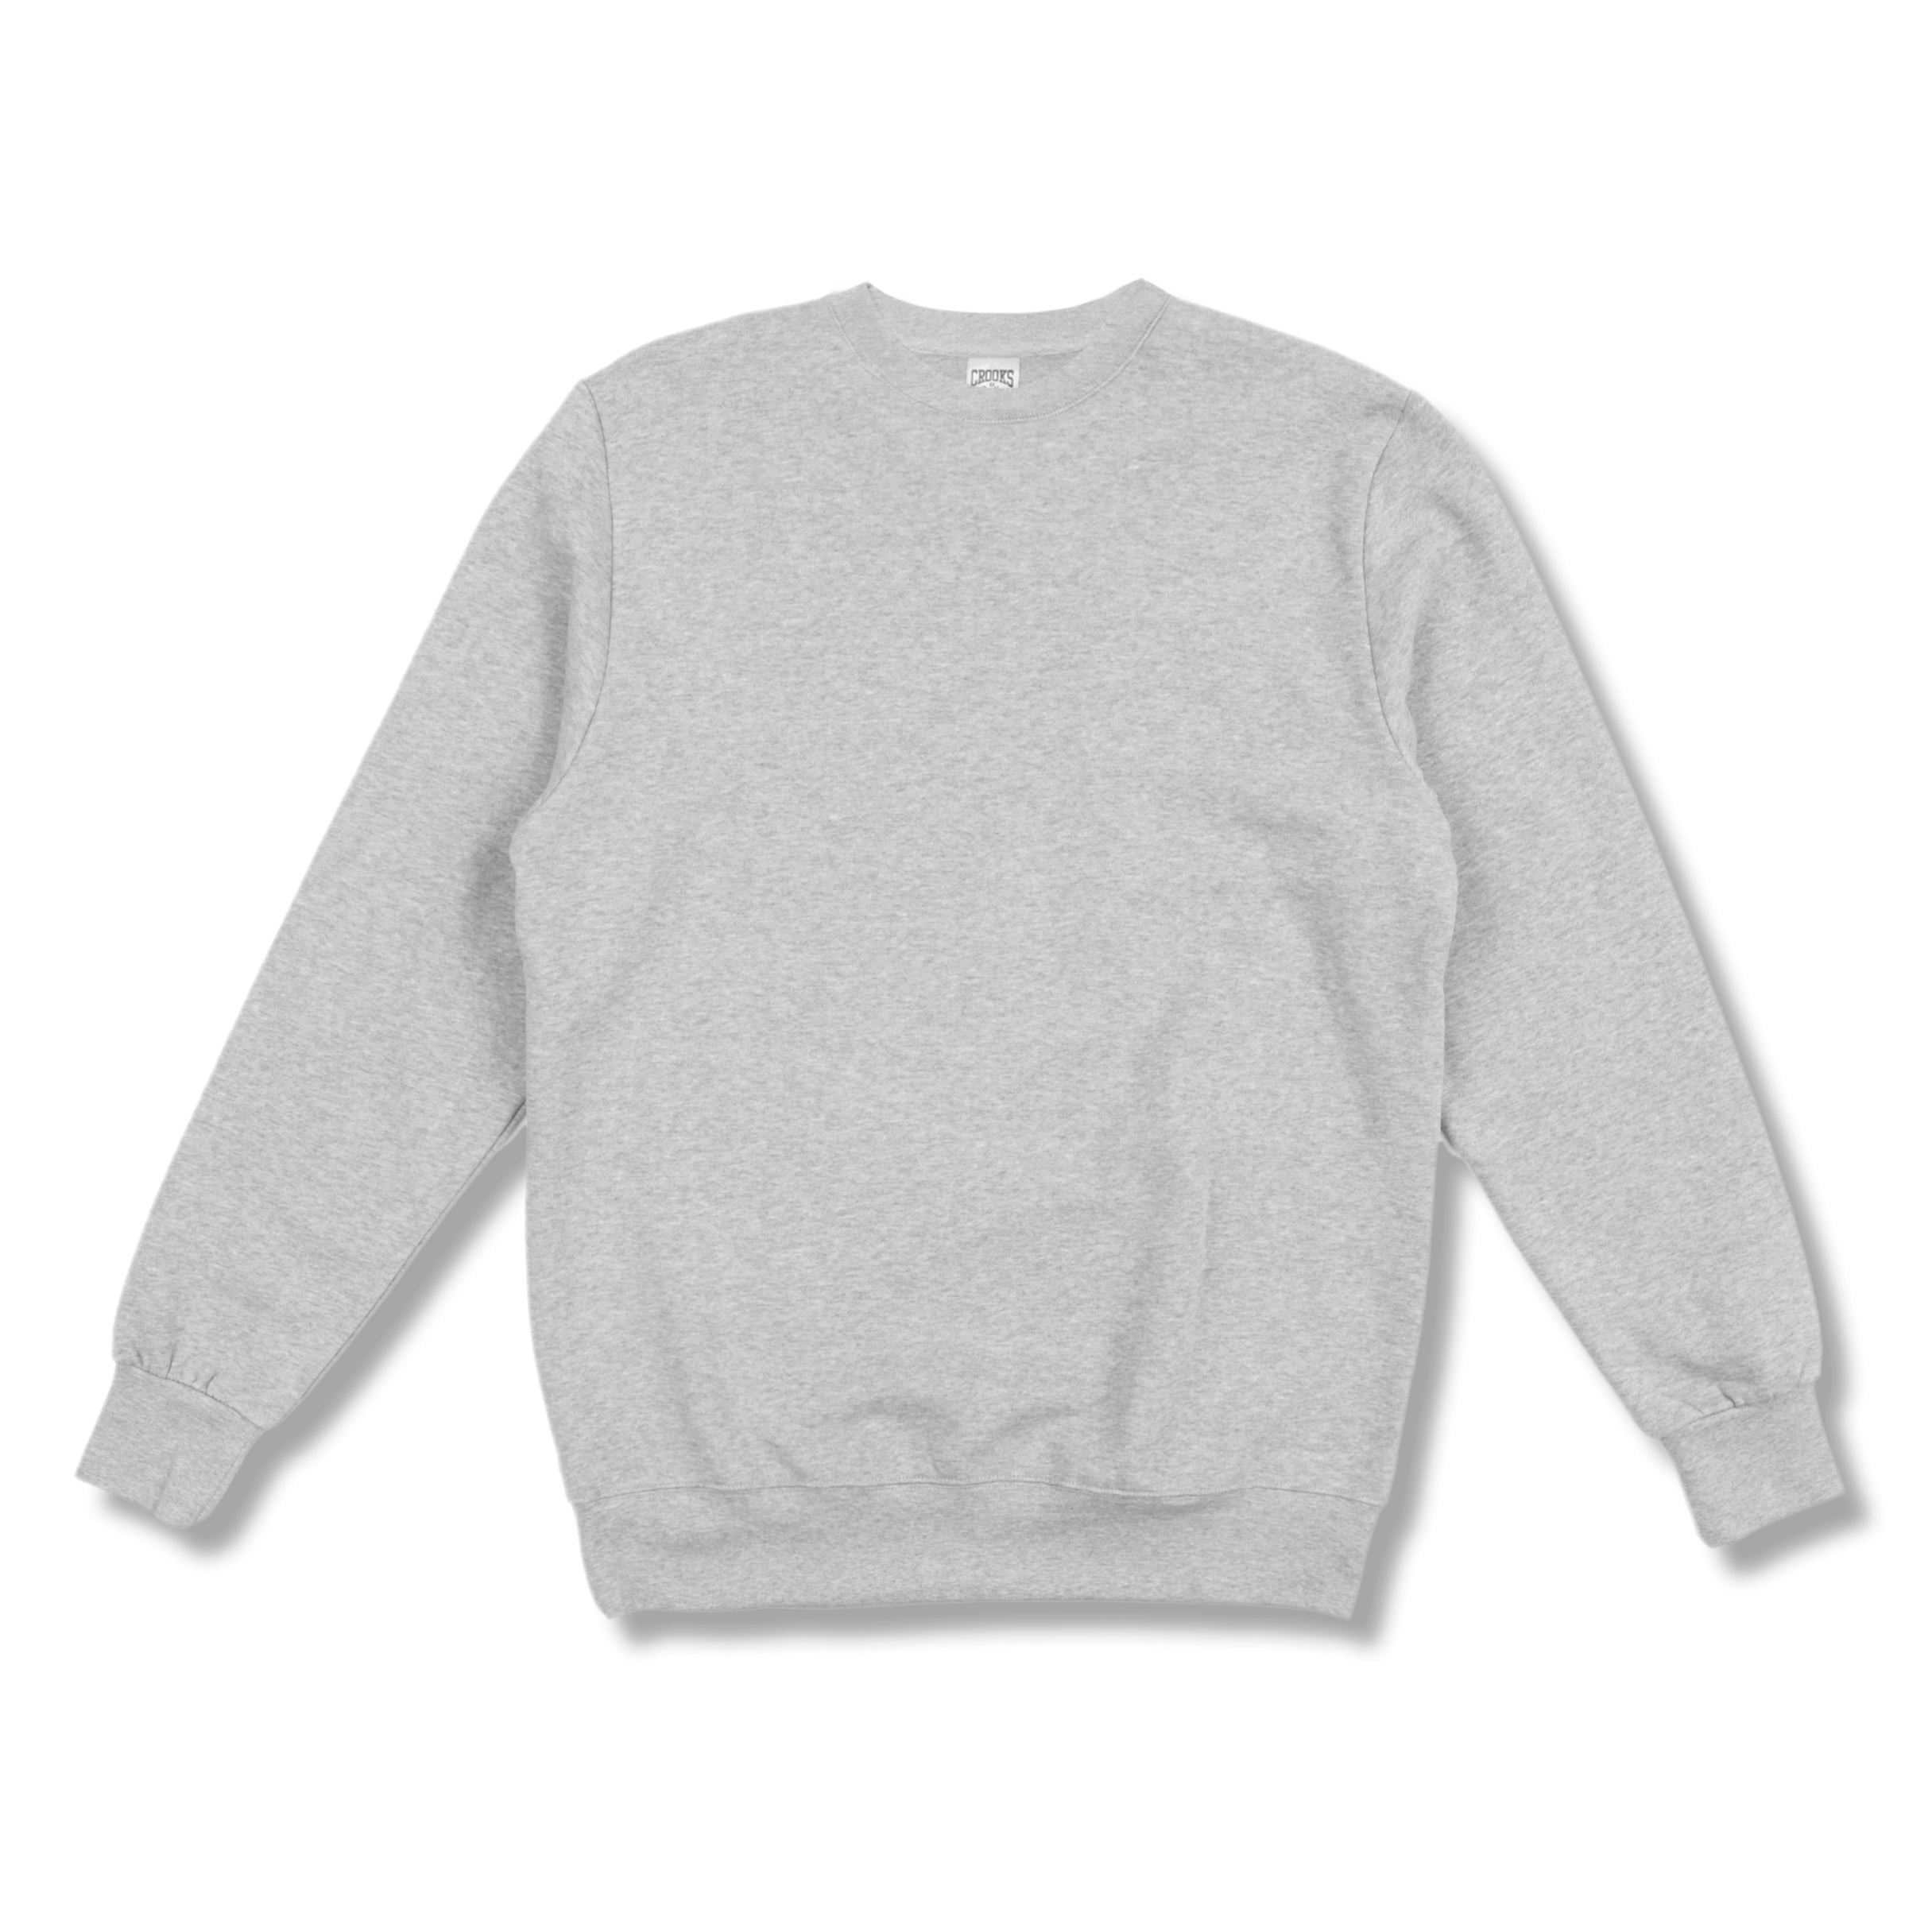 Essential Sweatshirt - Heather Grey